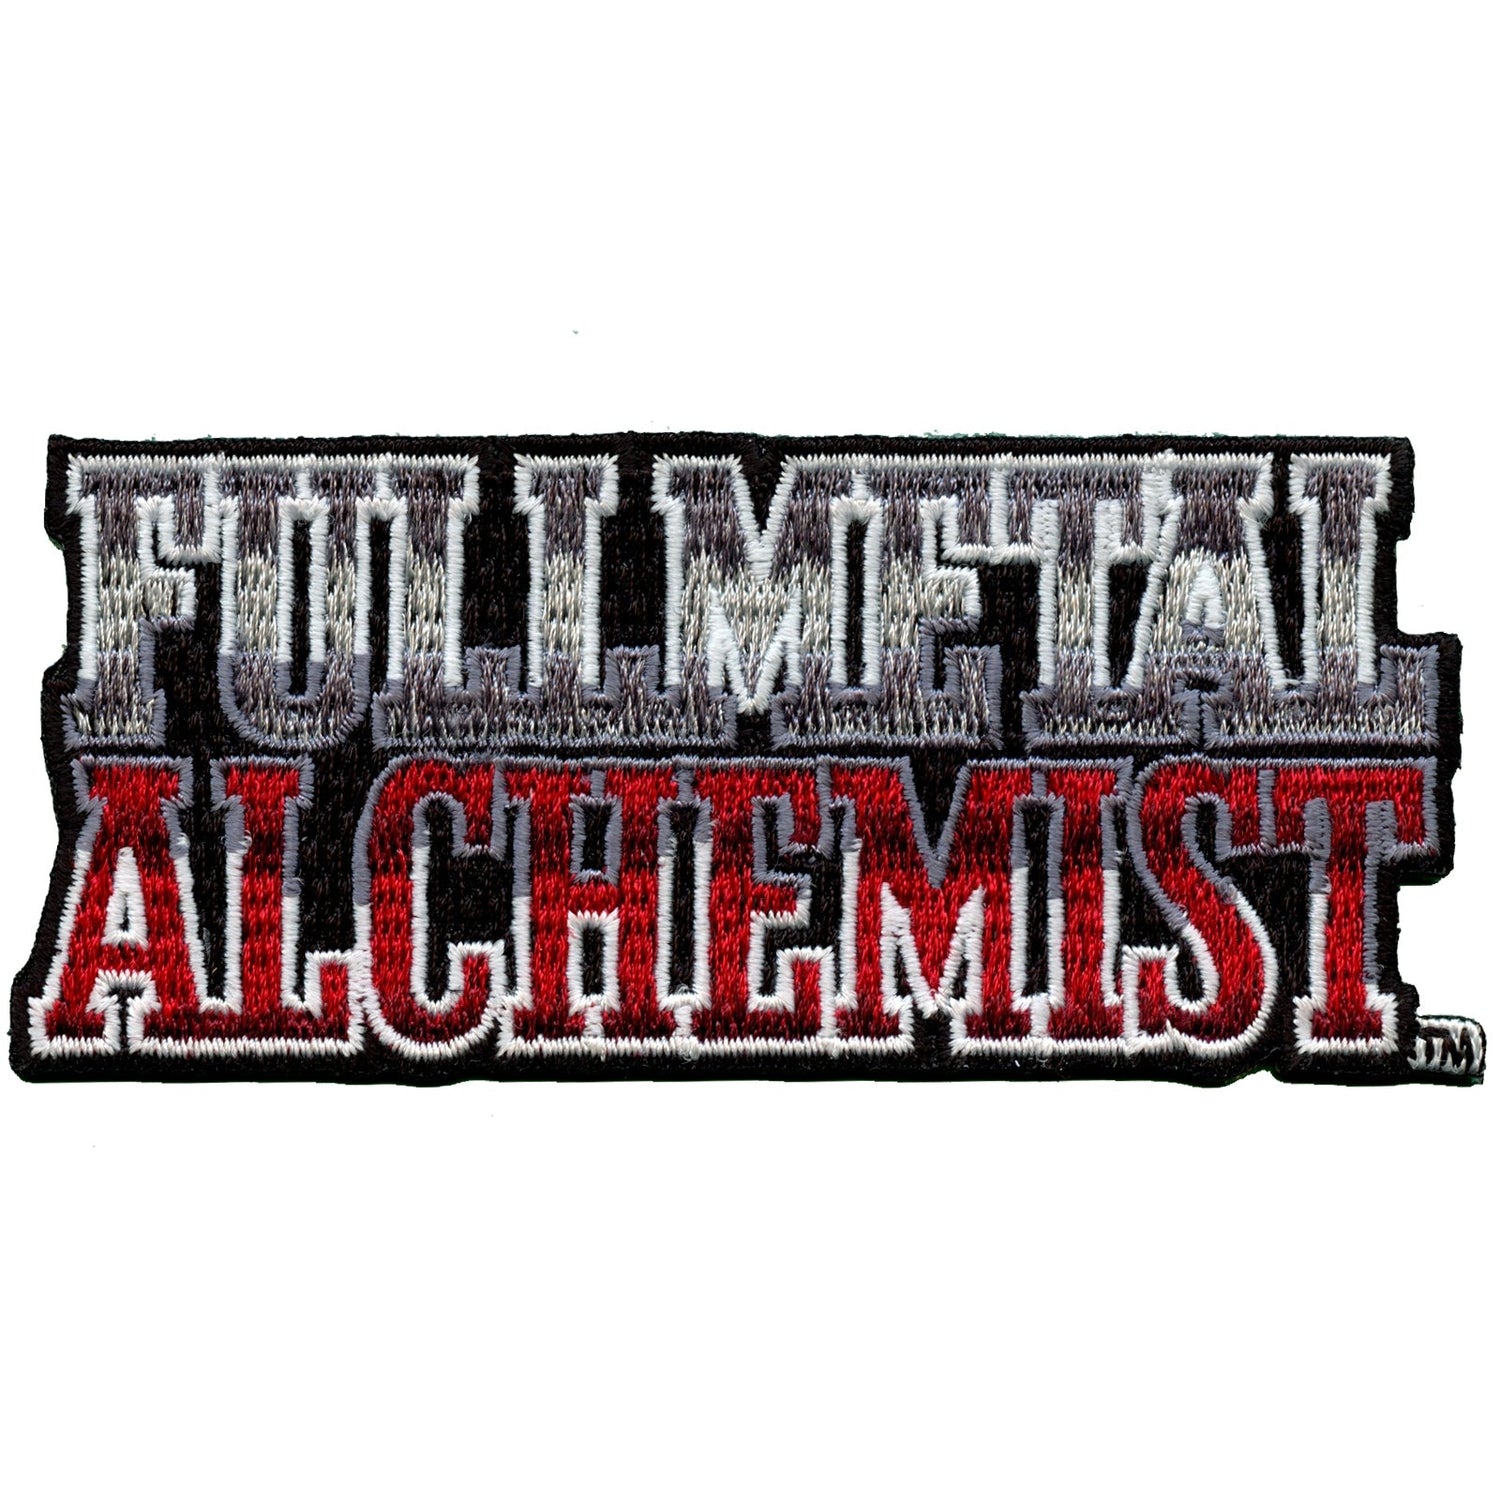 Fullmental Alchemist Patches